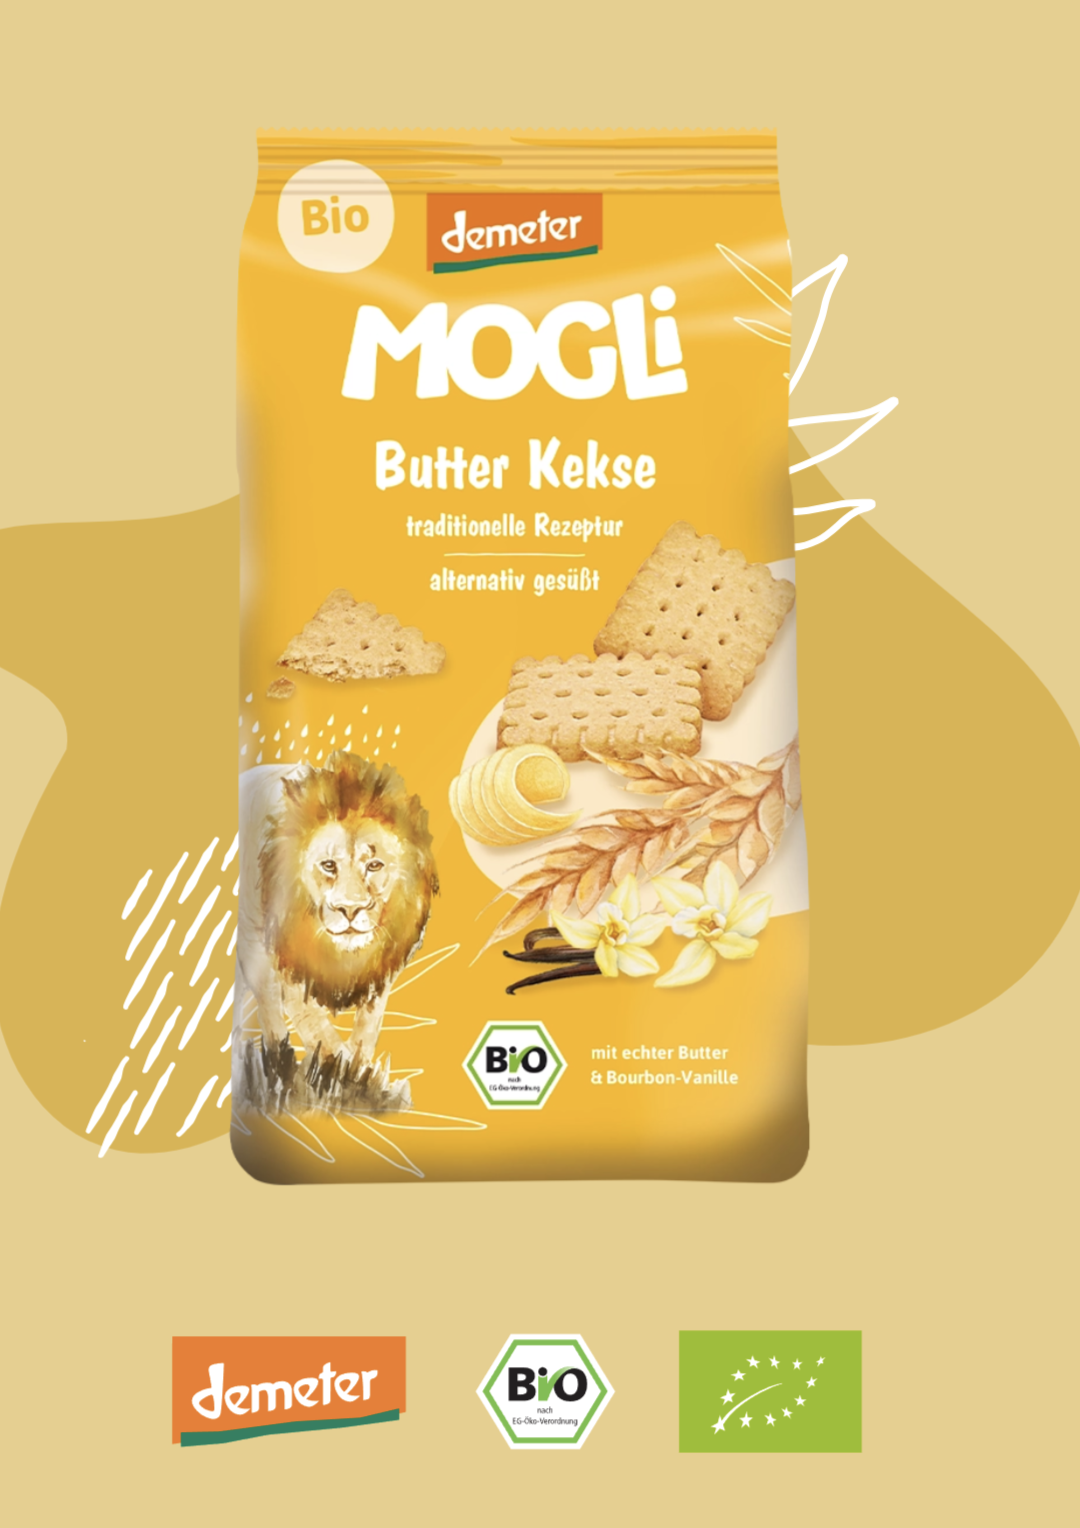 Mogli Organic Butter Biscuit 125g